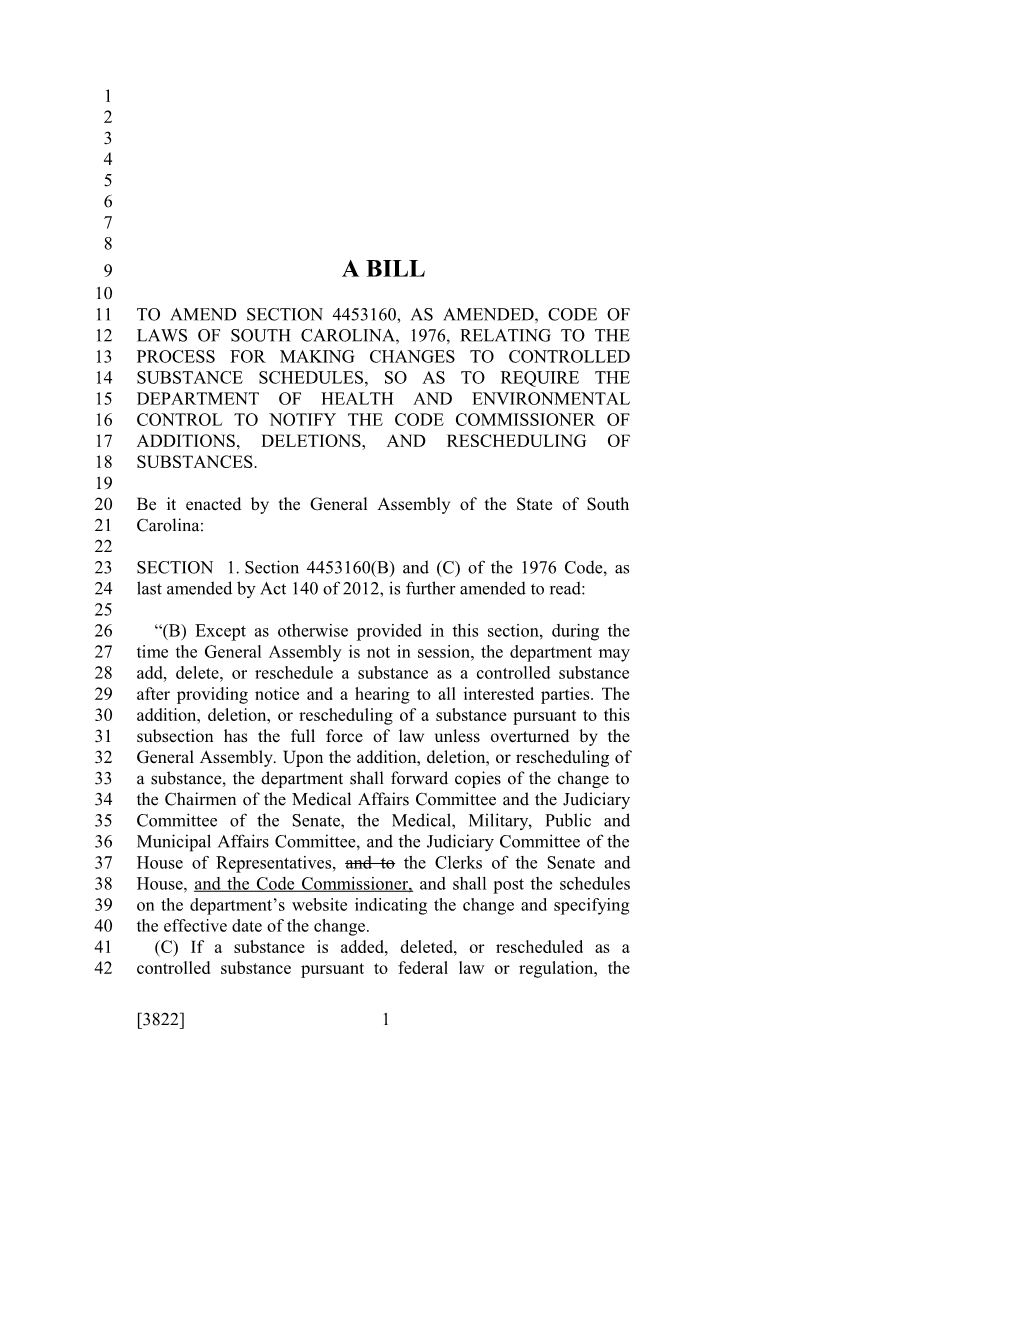 2017-2018 Bill 3822 Text of Previous Version (Feb. 22, 2017) - South Carolina Legislature Online